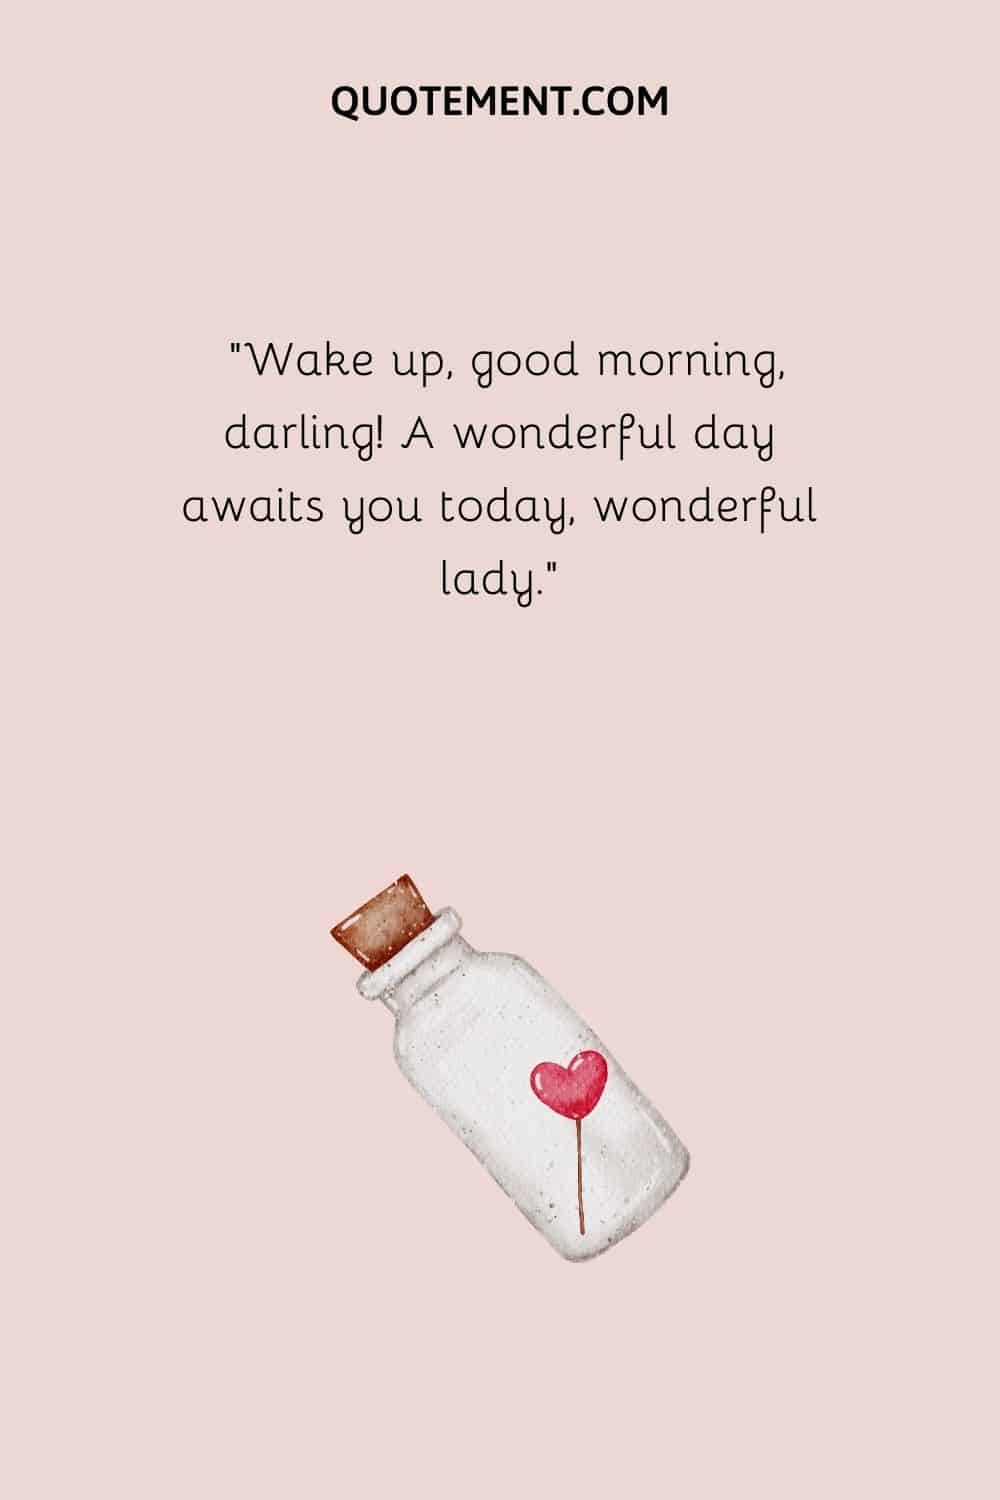 Wake up, good morning, darling! A wonderful day awaits you today, wonderful lady.